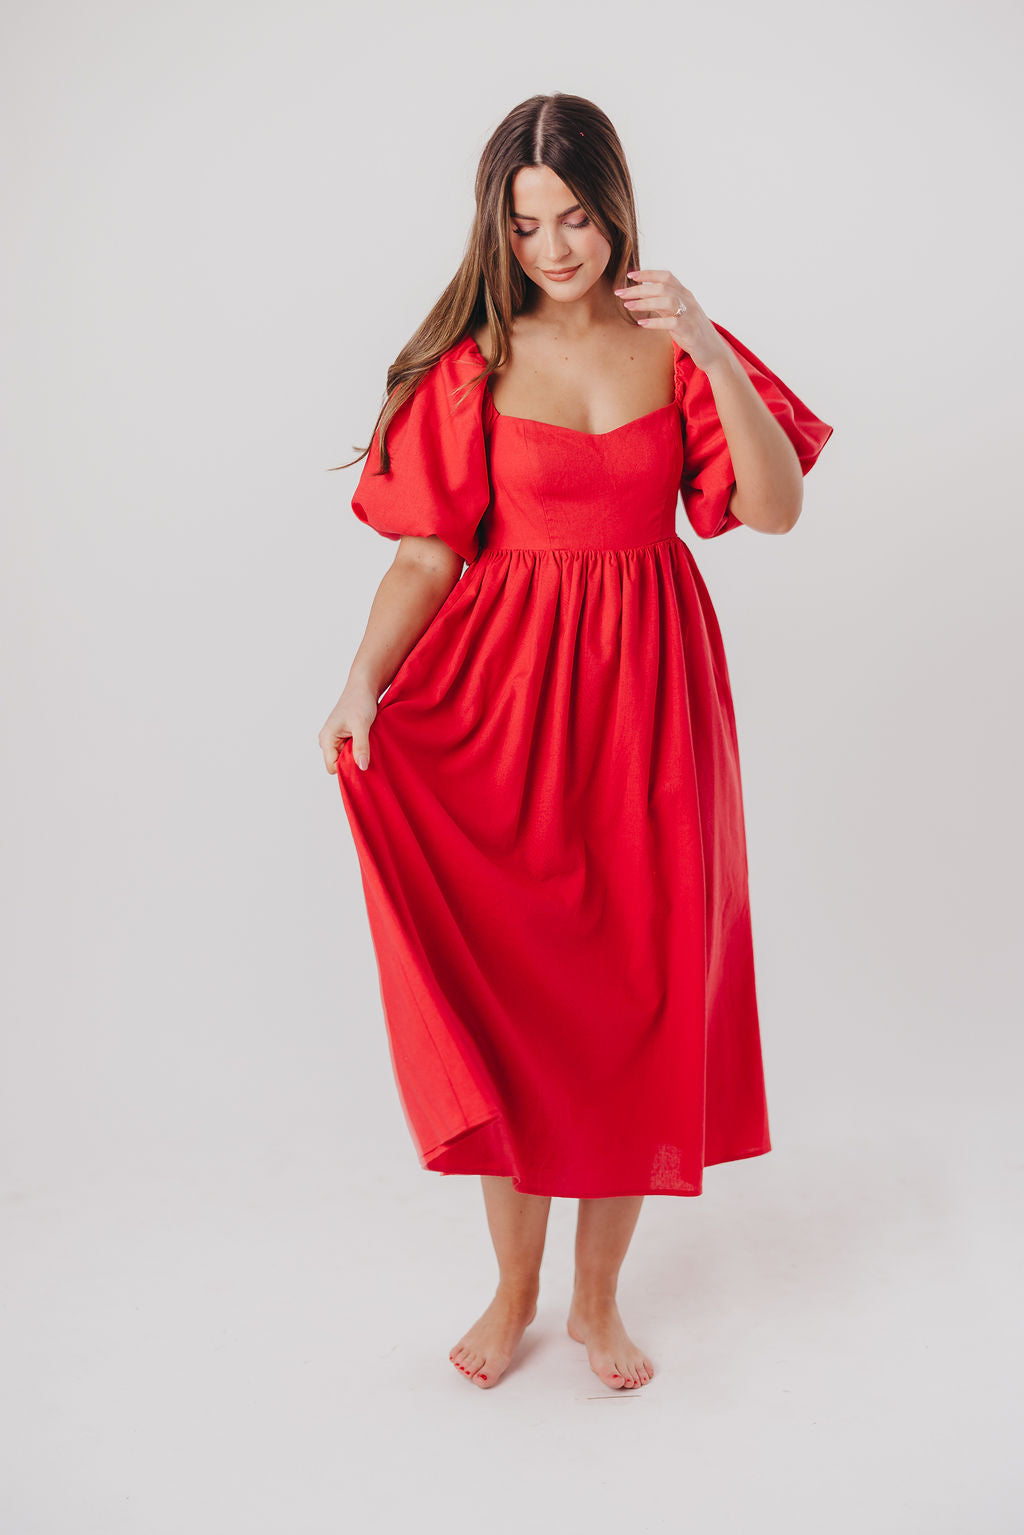 Hamilton Midi Dress in Red - Bump Friendly (S-XL)